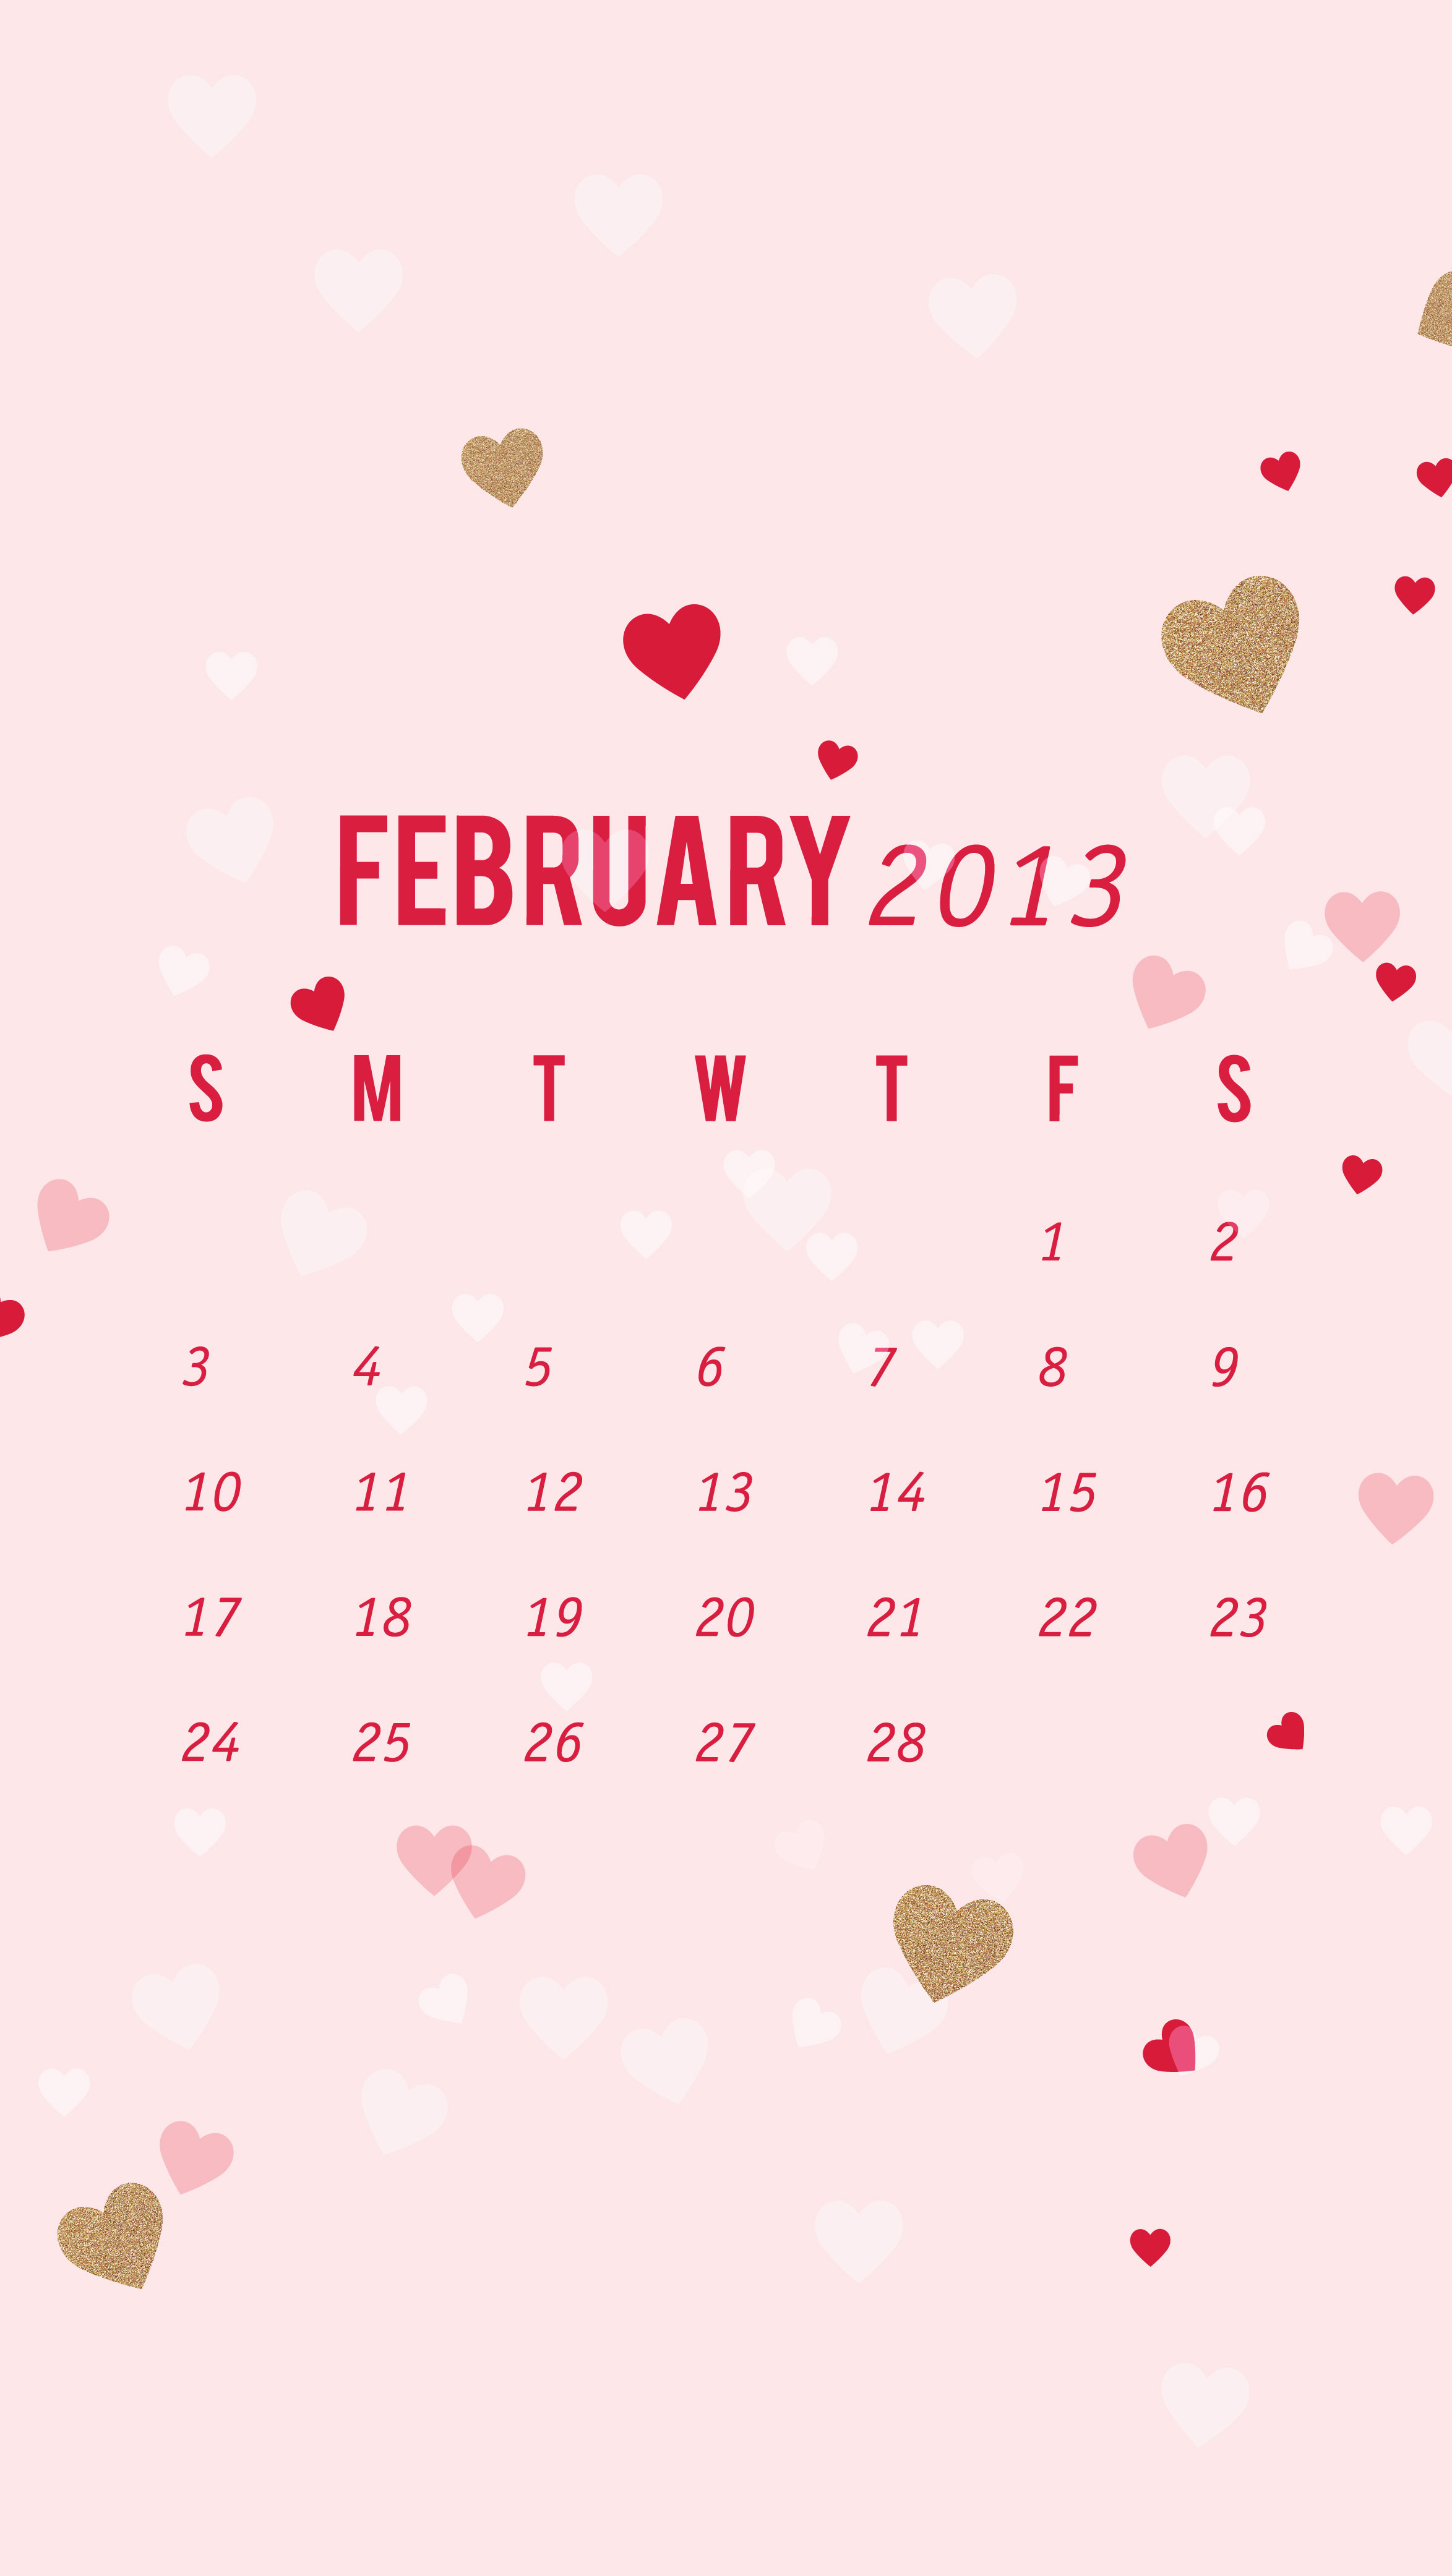 February 2013 Calendar Wallpaper - Sarah Hearts